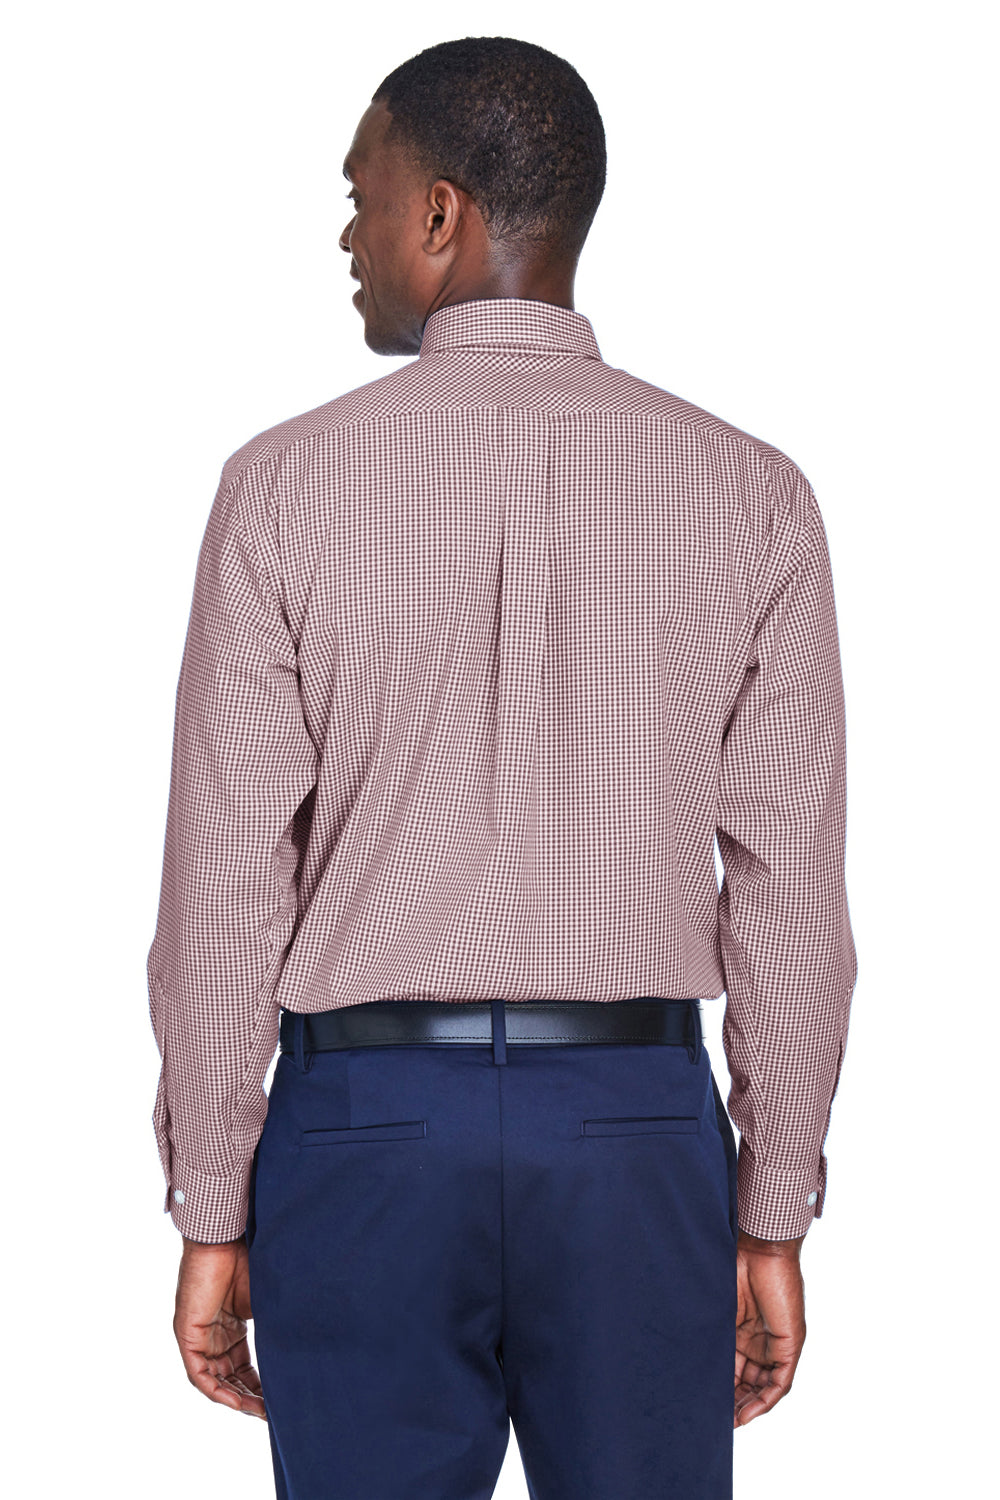 Devon & Jones D640 Mens Crown Woven Collection Wrinkle Resistant Long Sleeve Button Down Shirt w/ Pocket Burgundy Back